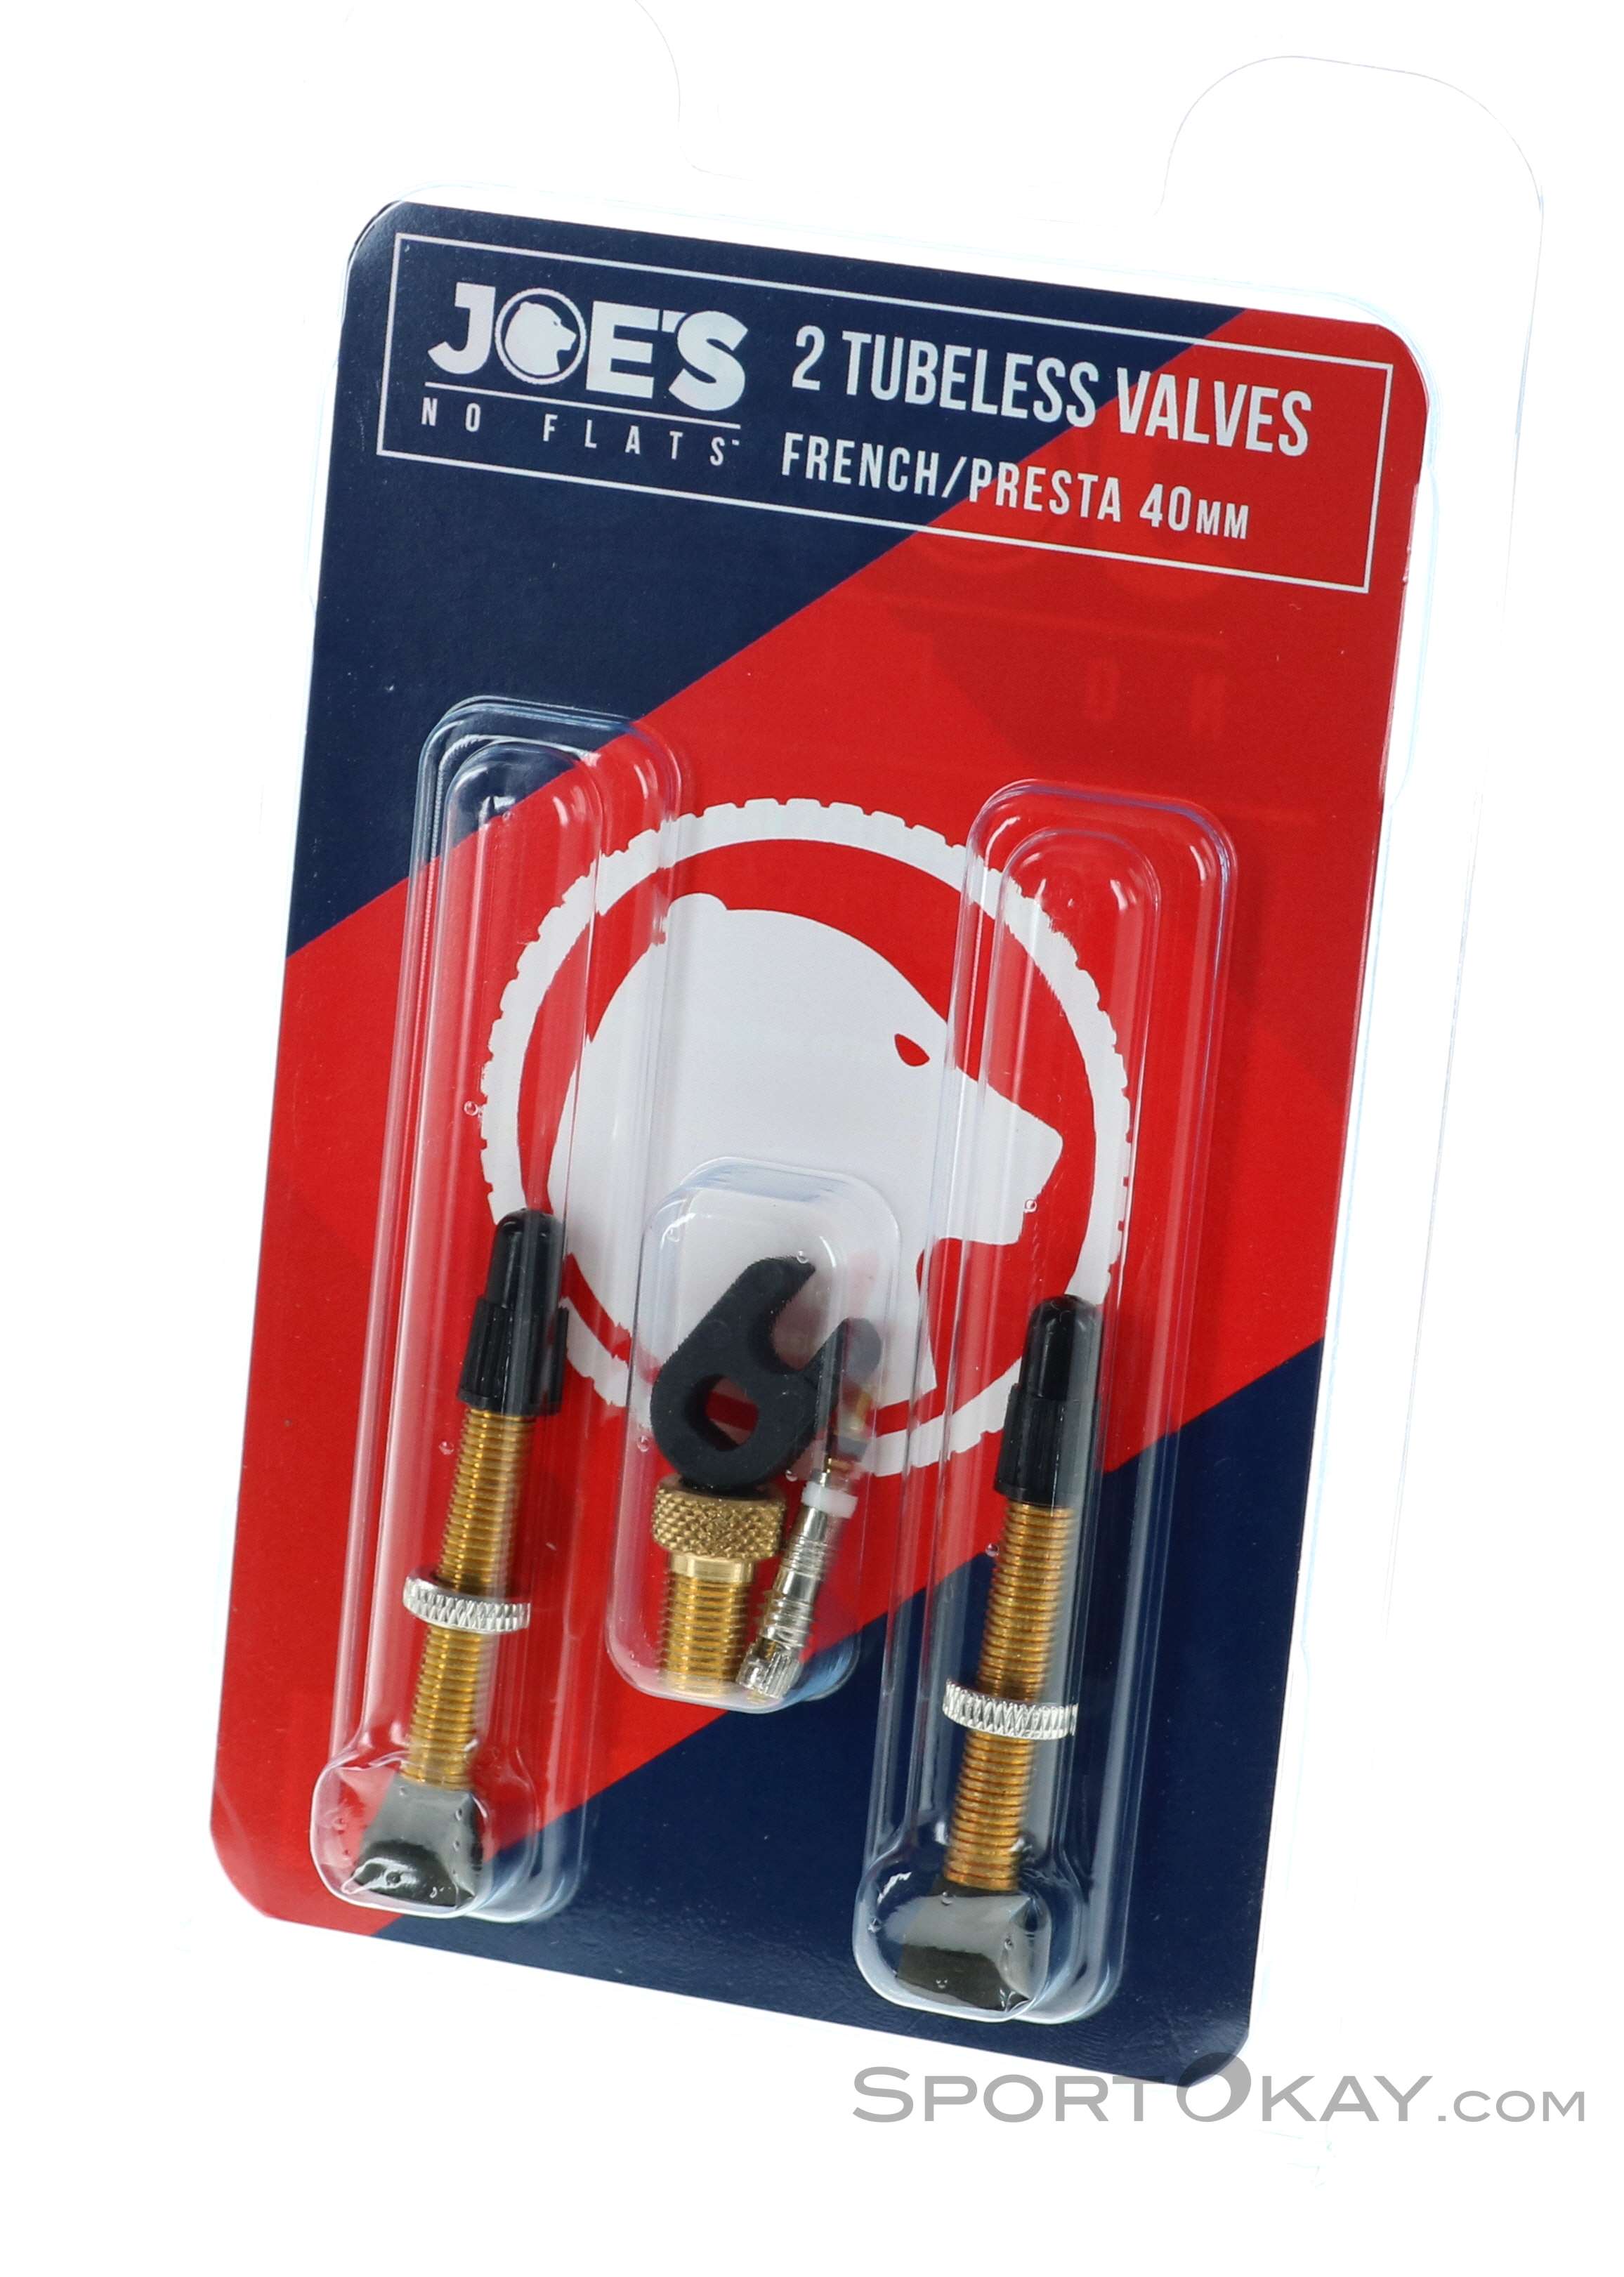 Joe's No-Flats Tubeless Presta 4mm Ventile - Reifen & Schlauch